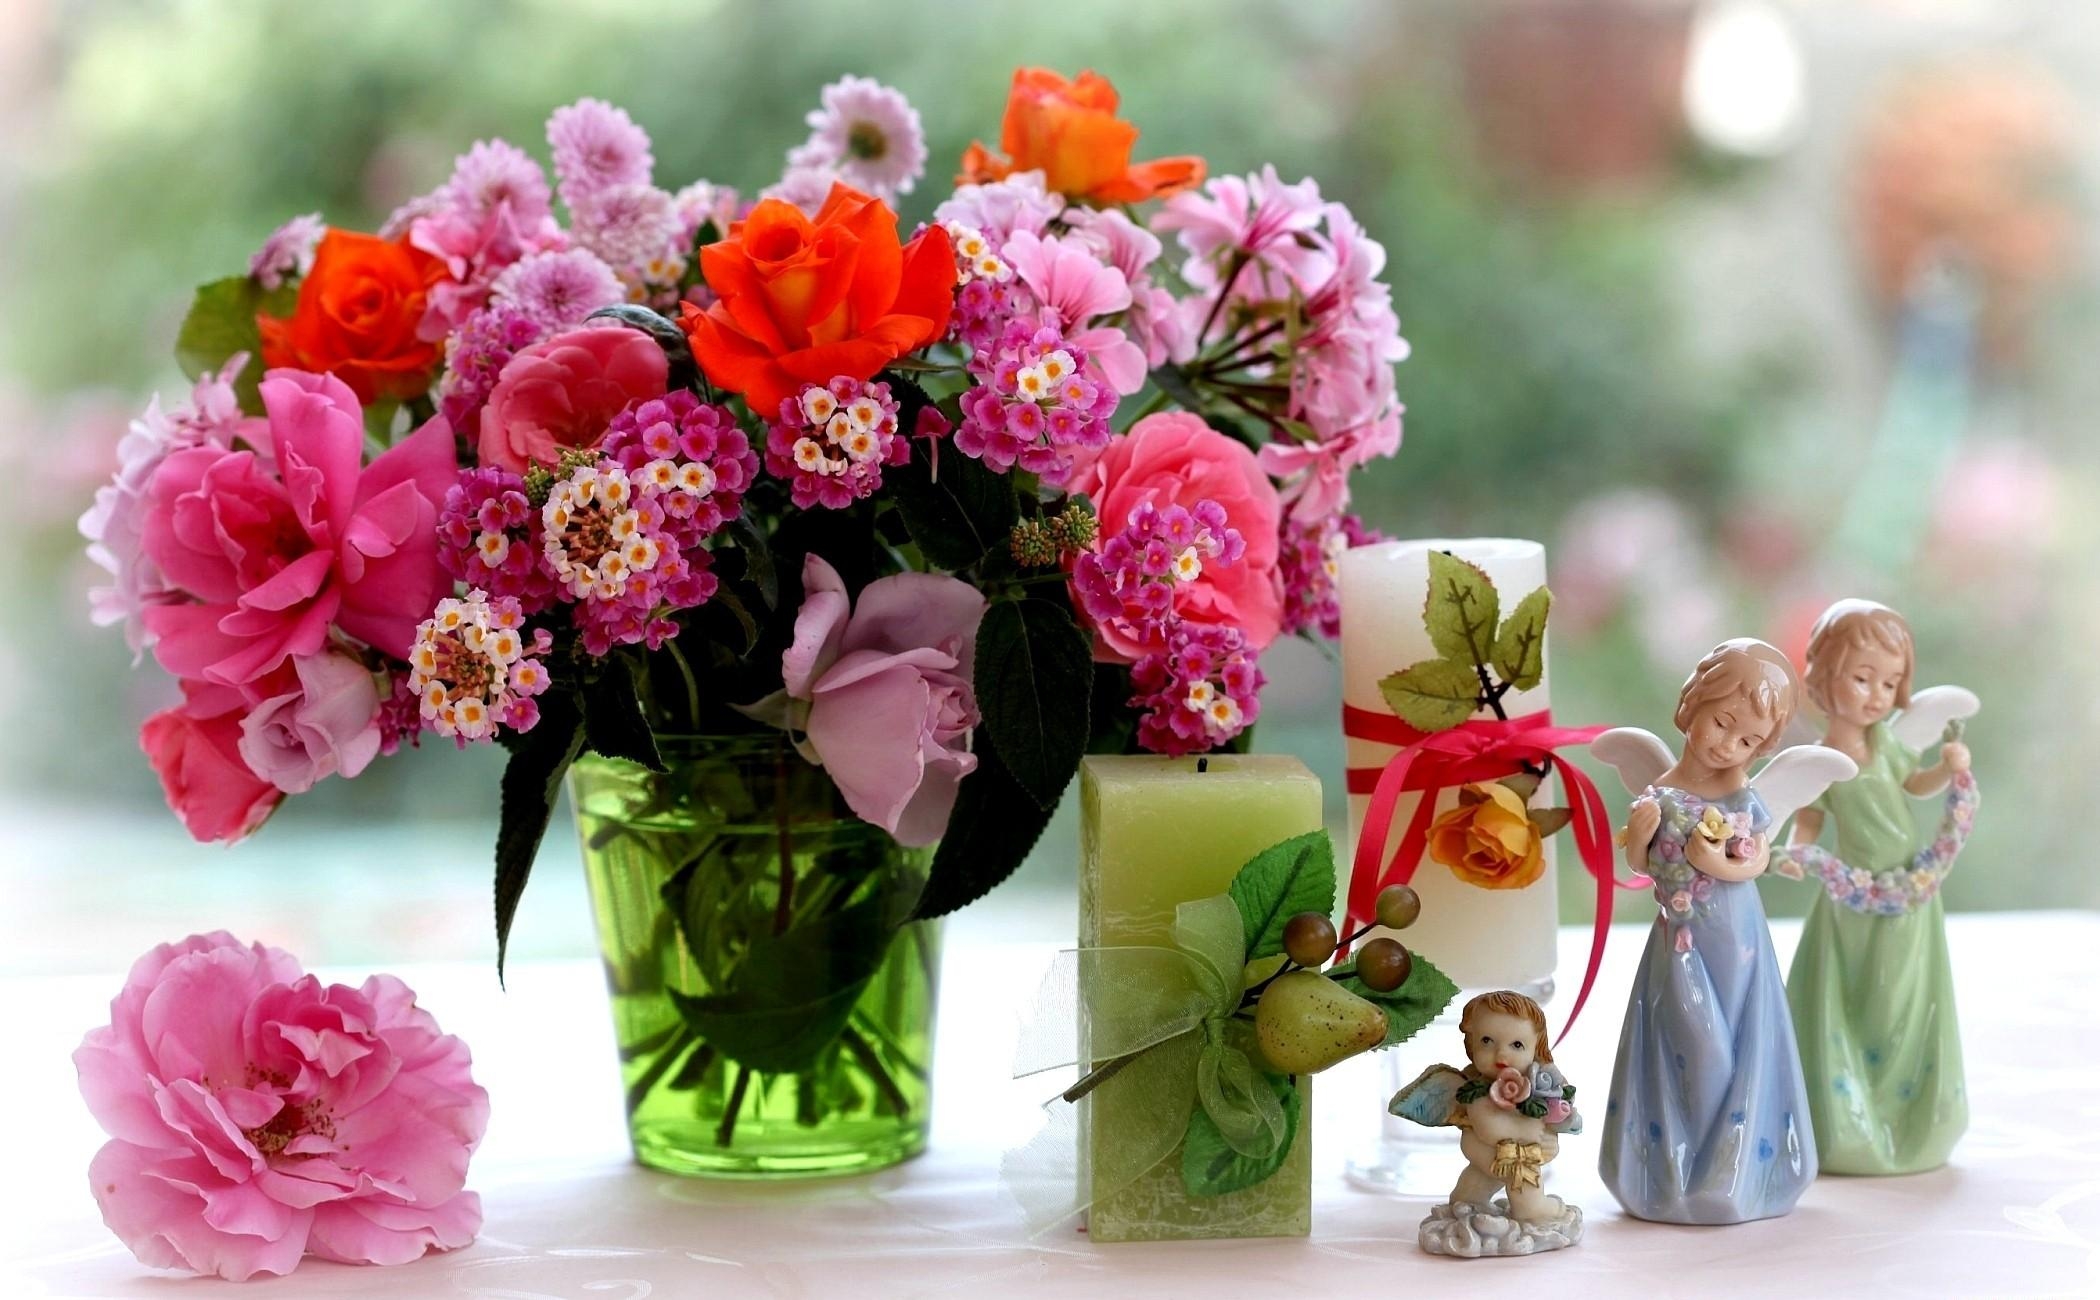 flowers, roses, angels, chrysanthemum, candles, bouquet, figurines, figures, lantana, lanthanum